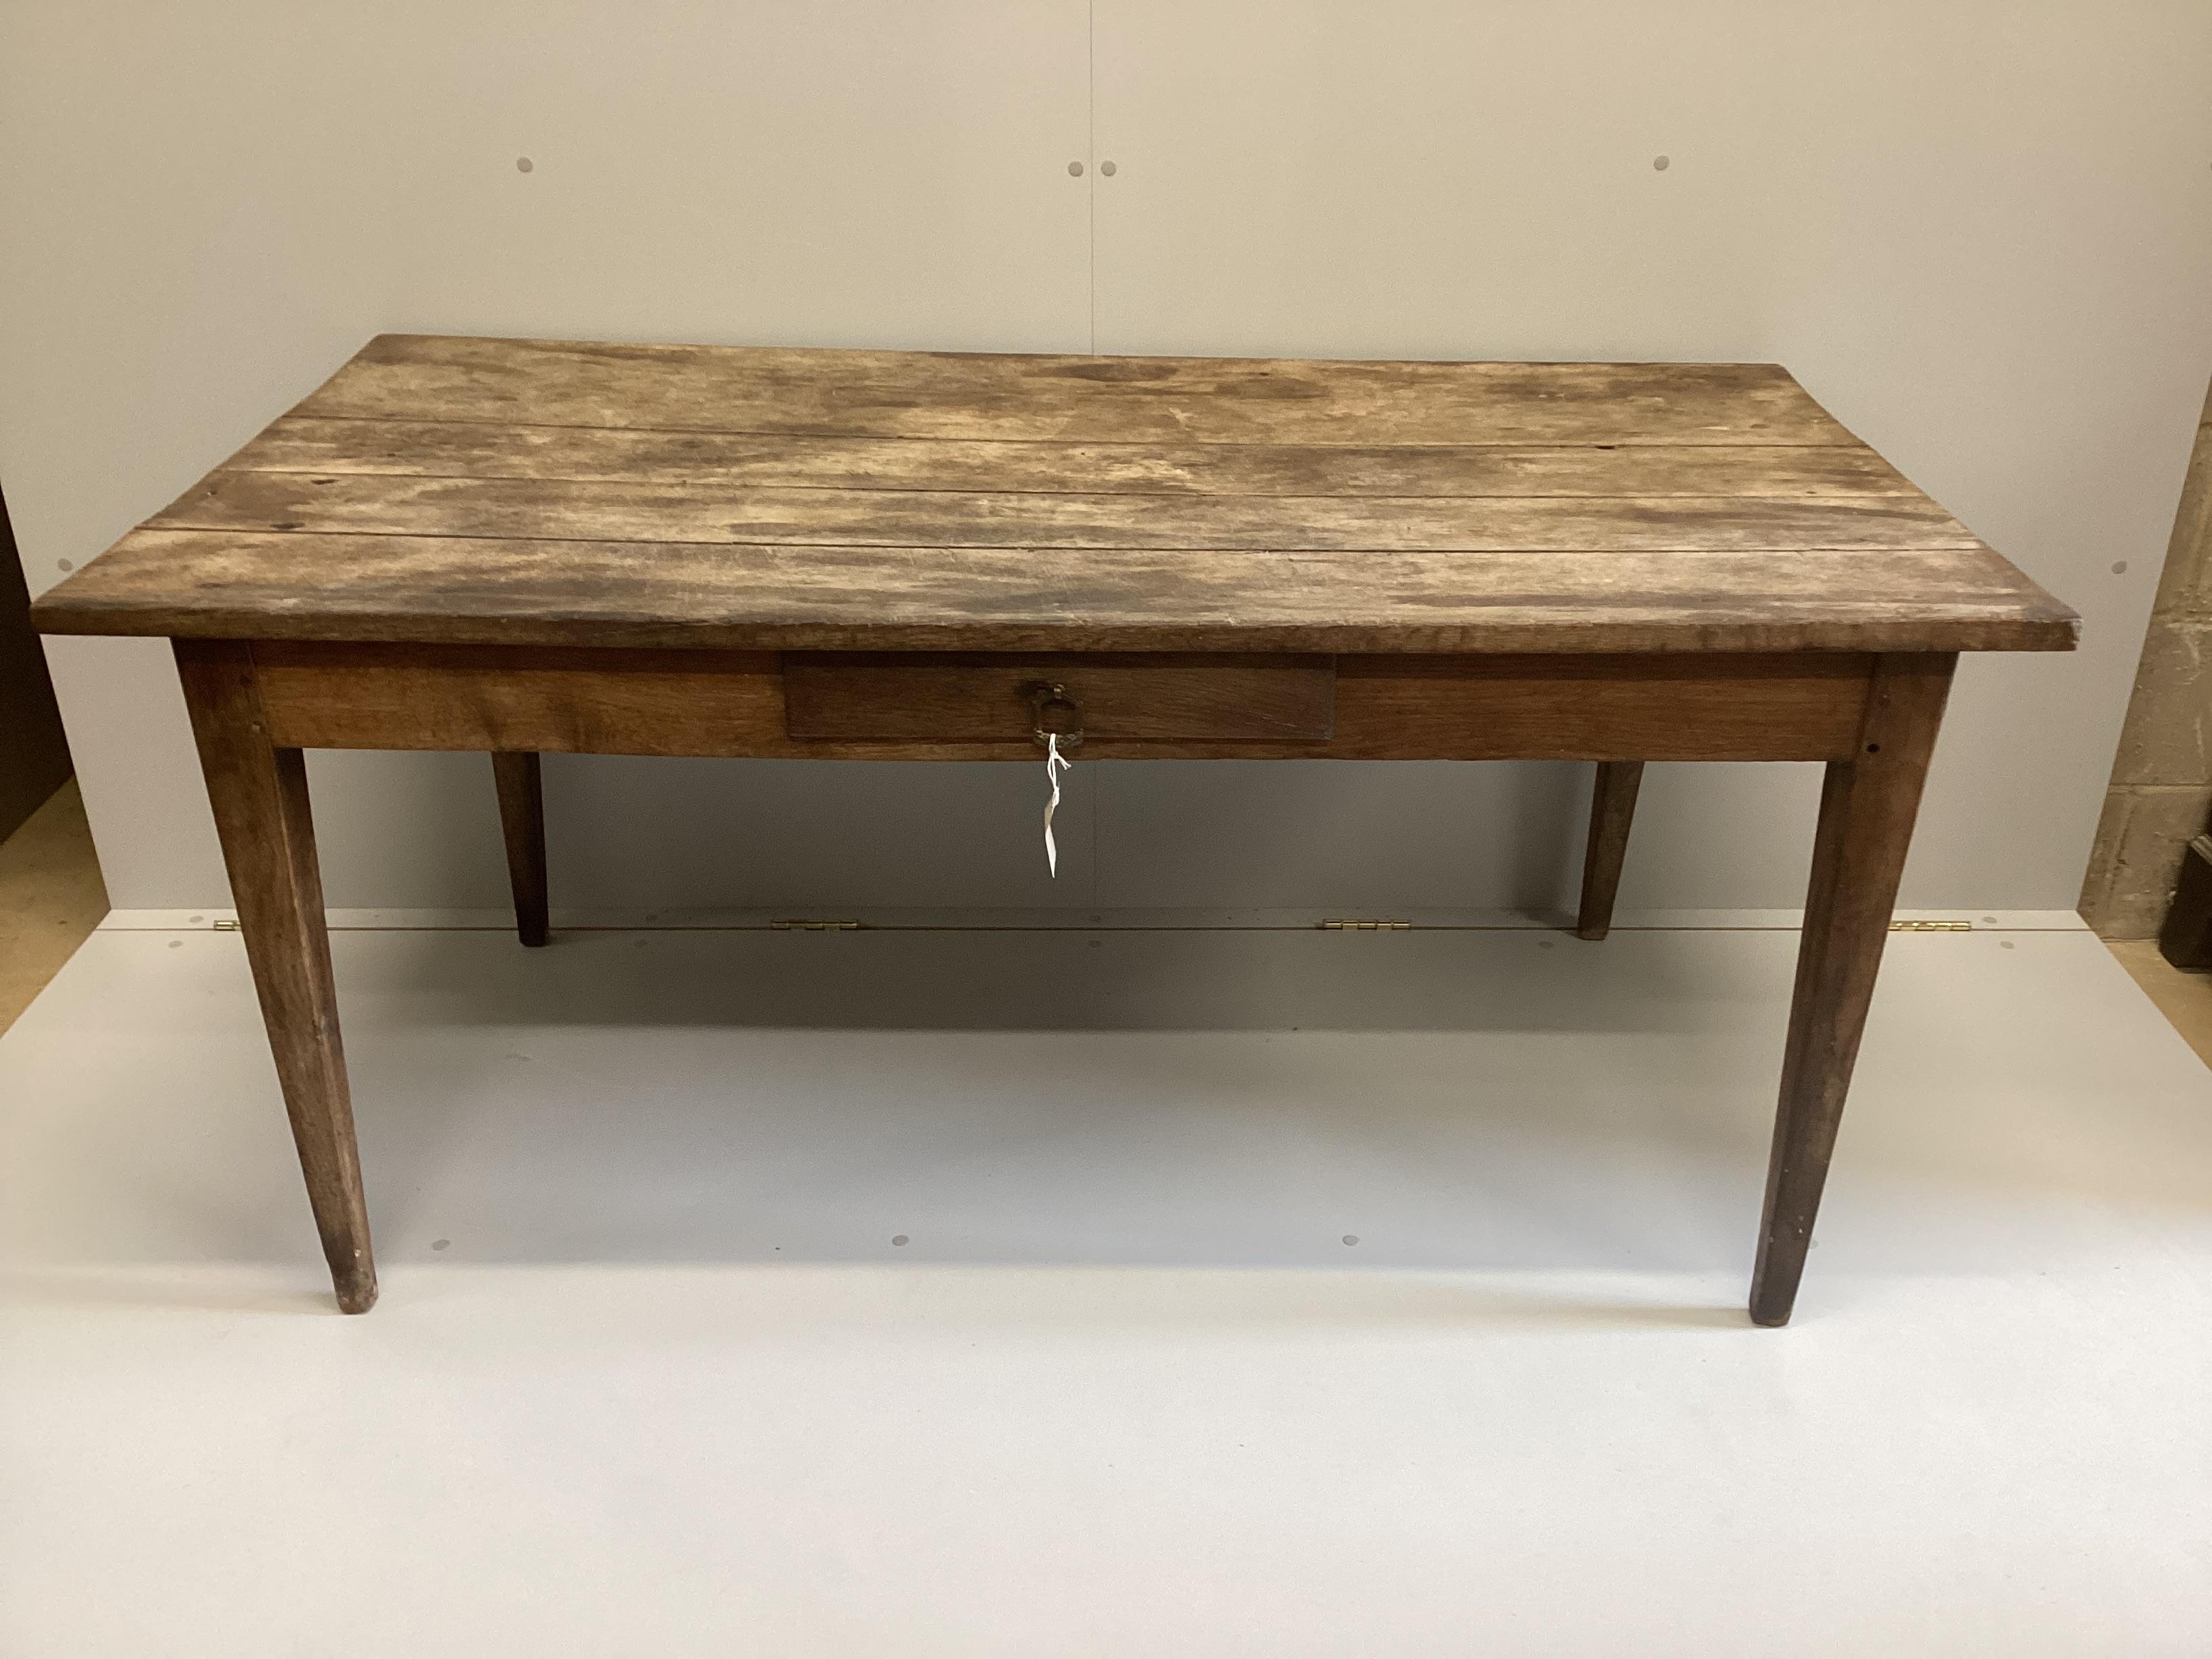 A 19th century French rectangular oak kitchen table, width 149cm, depth 78cm, height 69cm